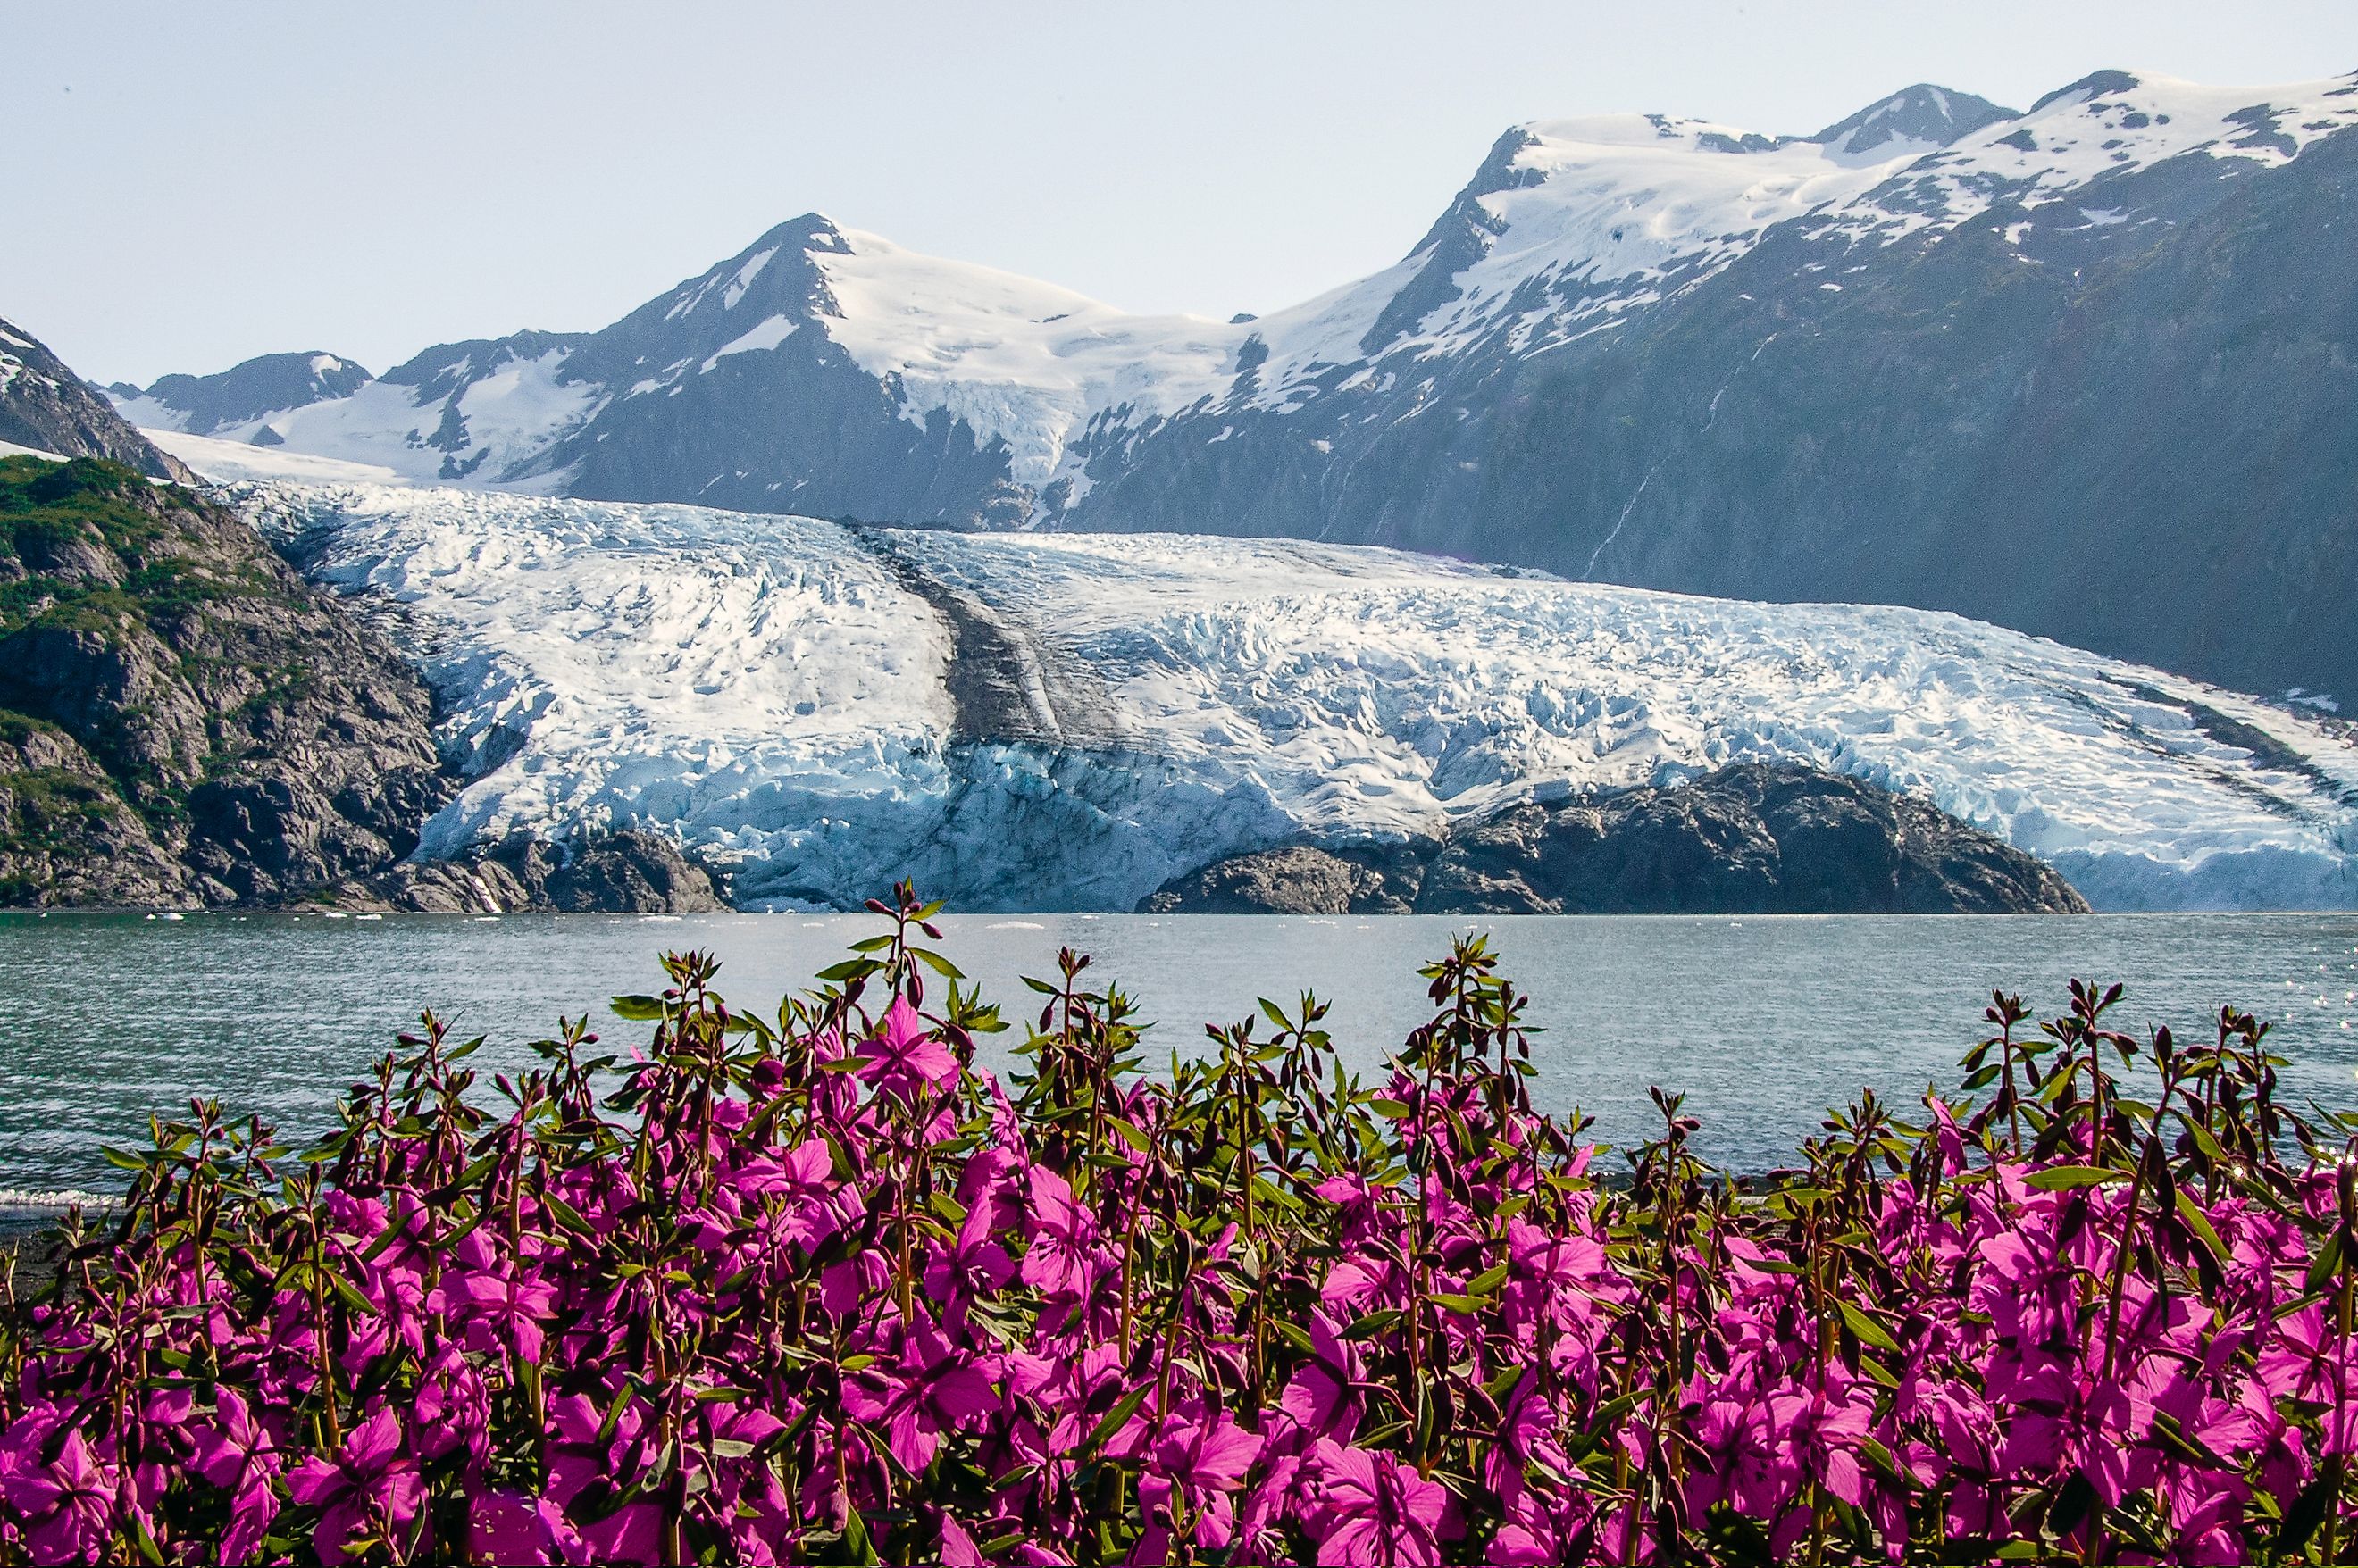 Portage glacier in the Chugach mountains and Portage lake in the background. Image credits: Mariia Suvorova via Shutterstock